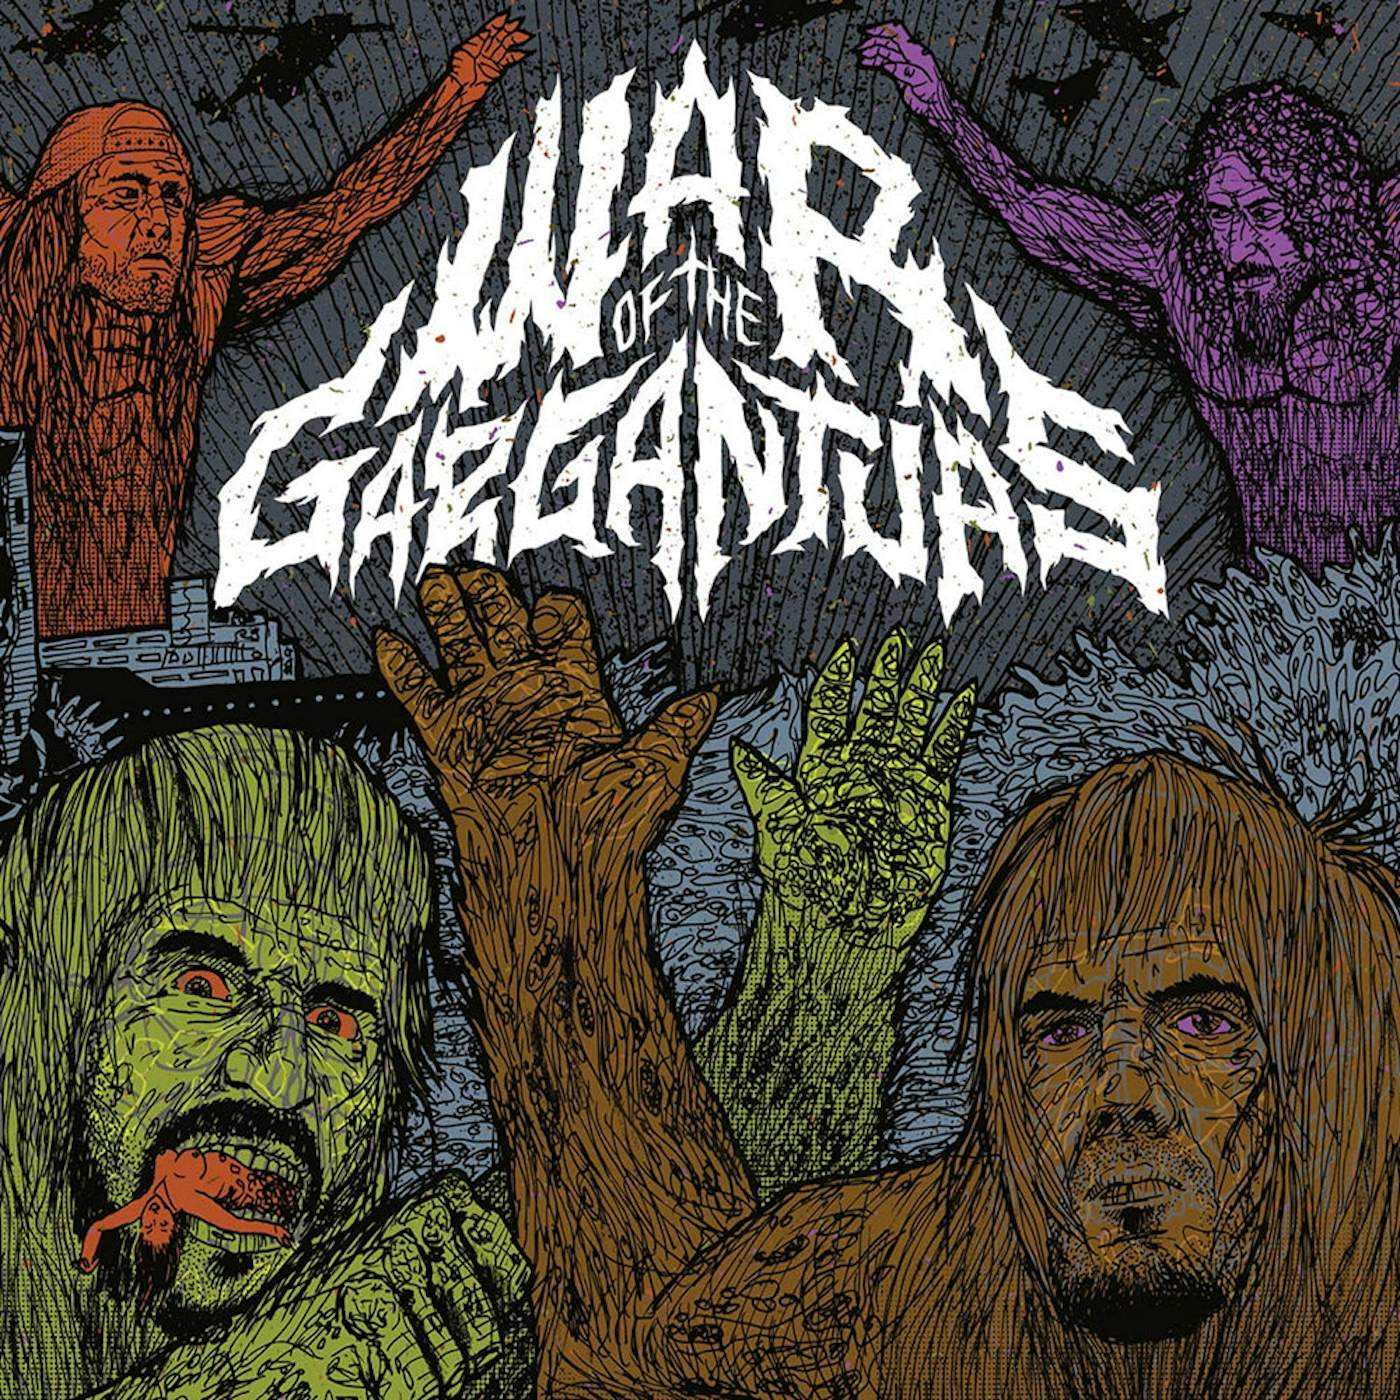 Philip H. Anselmo & Warbeast LP - War Of The Gargantuas (Vinyl)